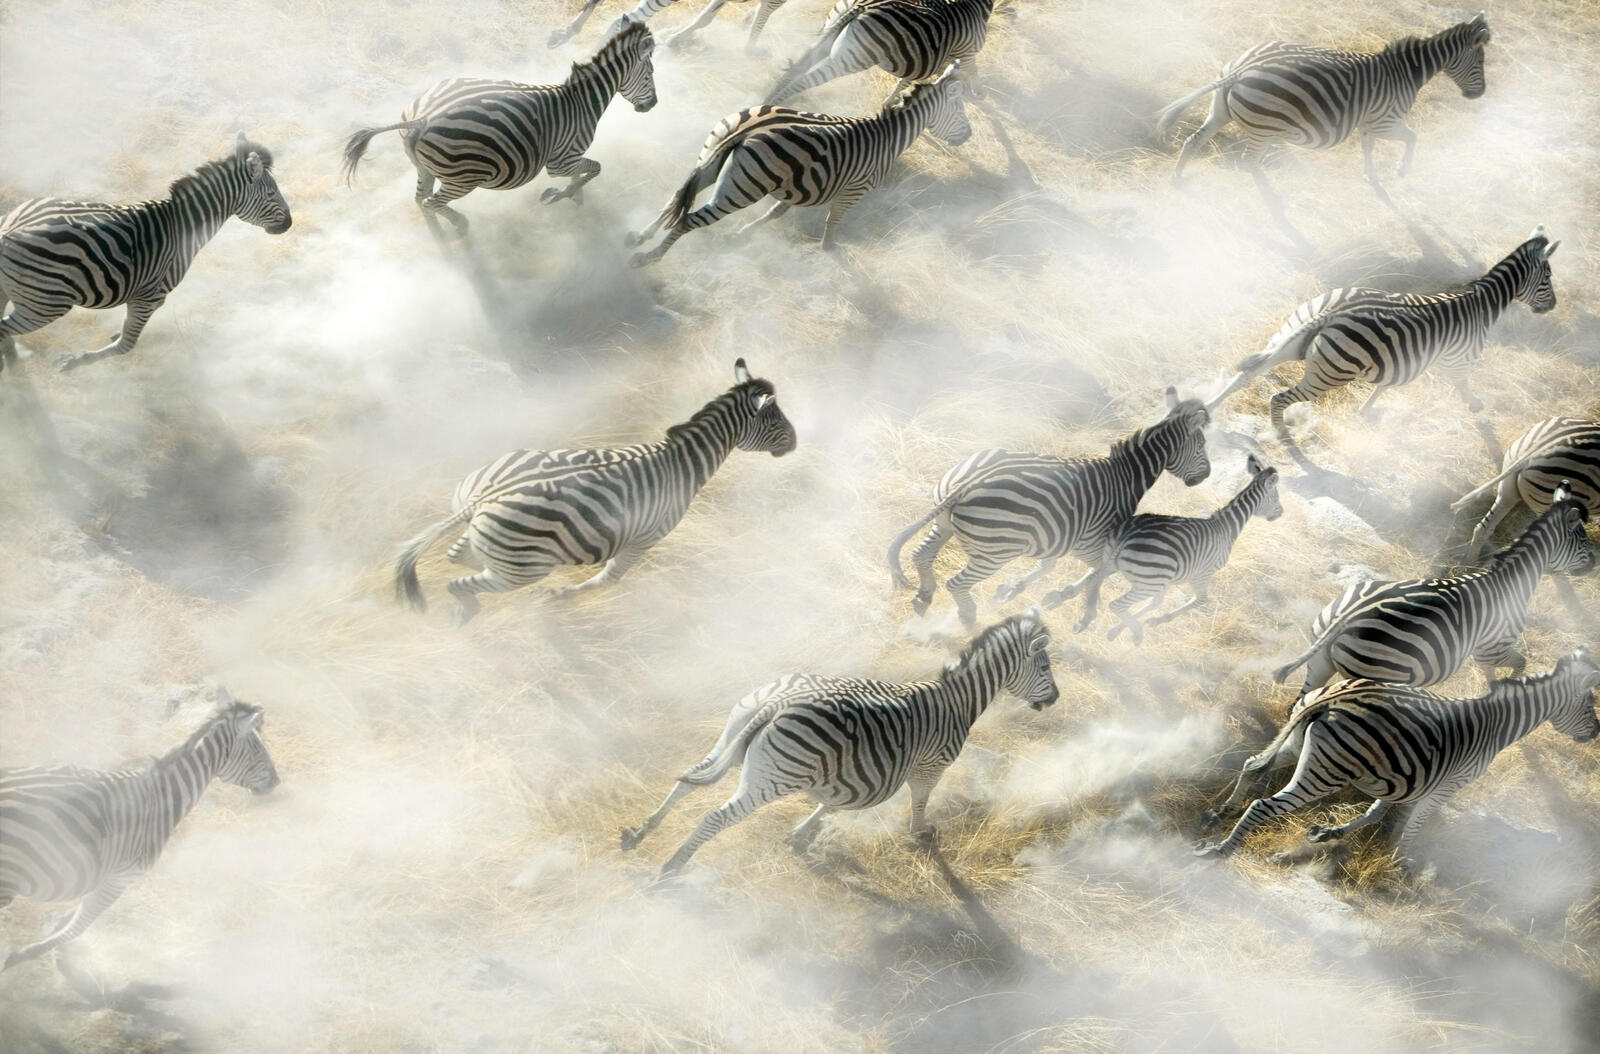 Zebras On The Move Magazine Articles Wwf